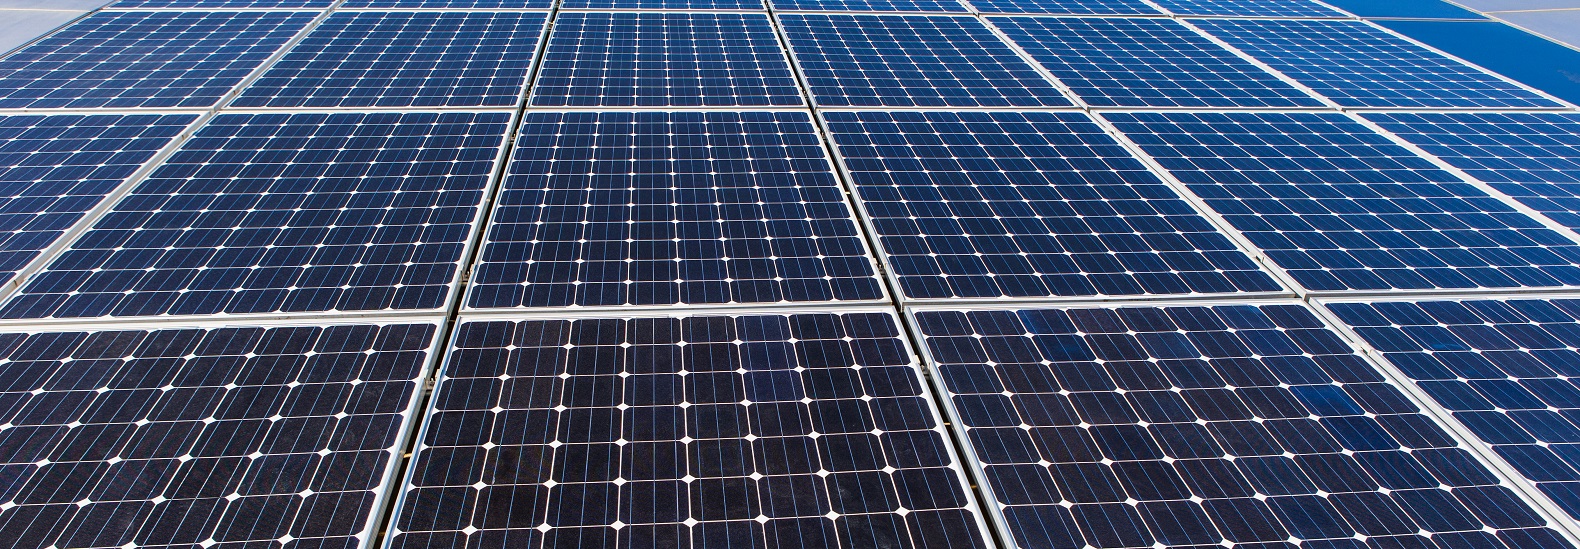 Three reasons home solar saves you money